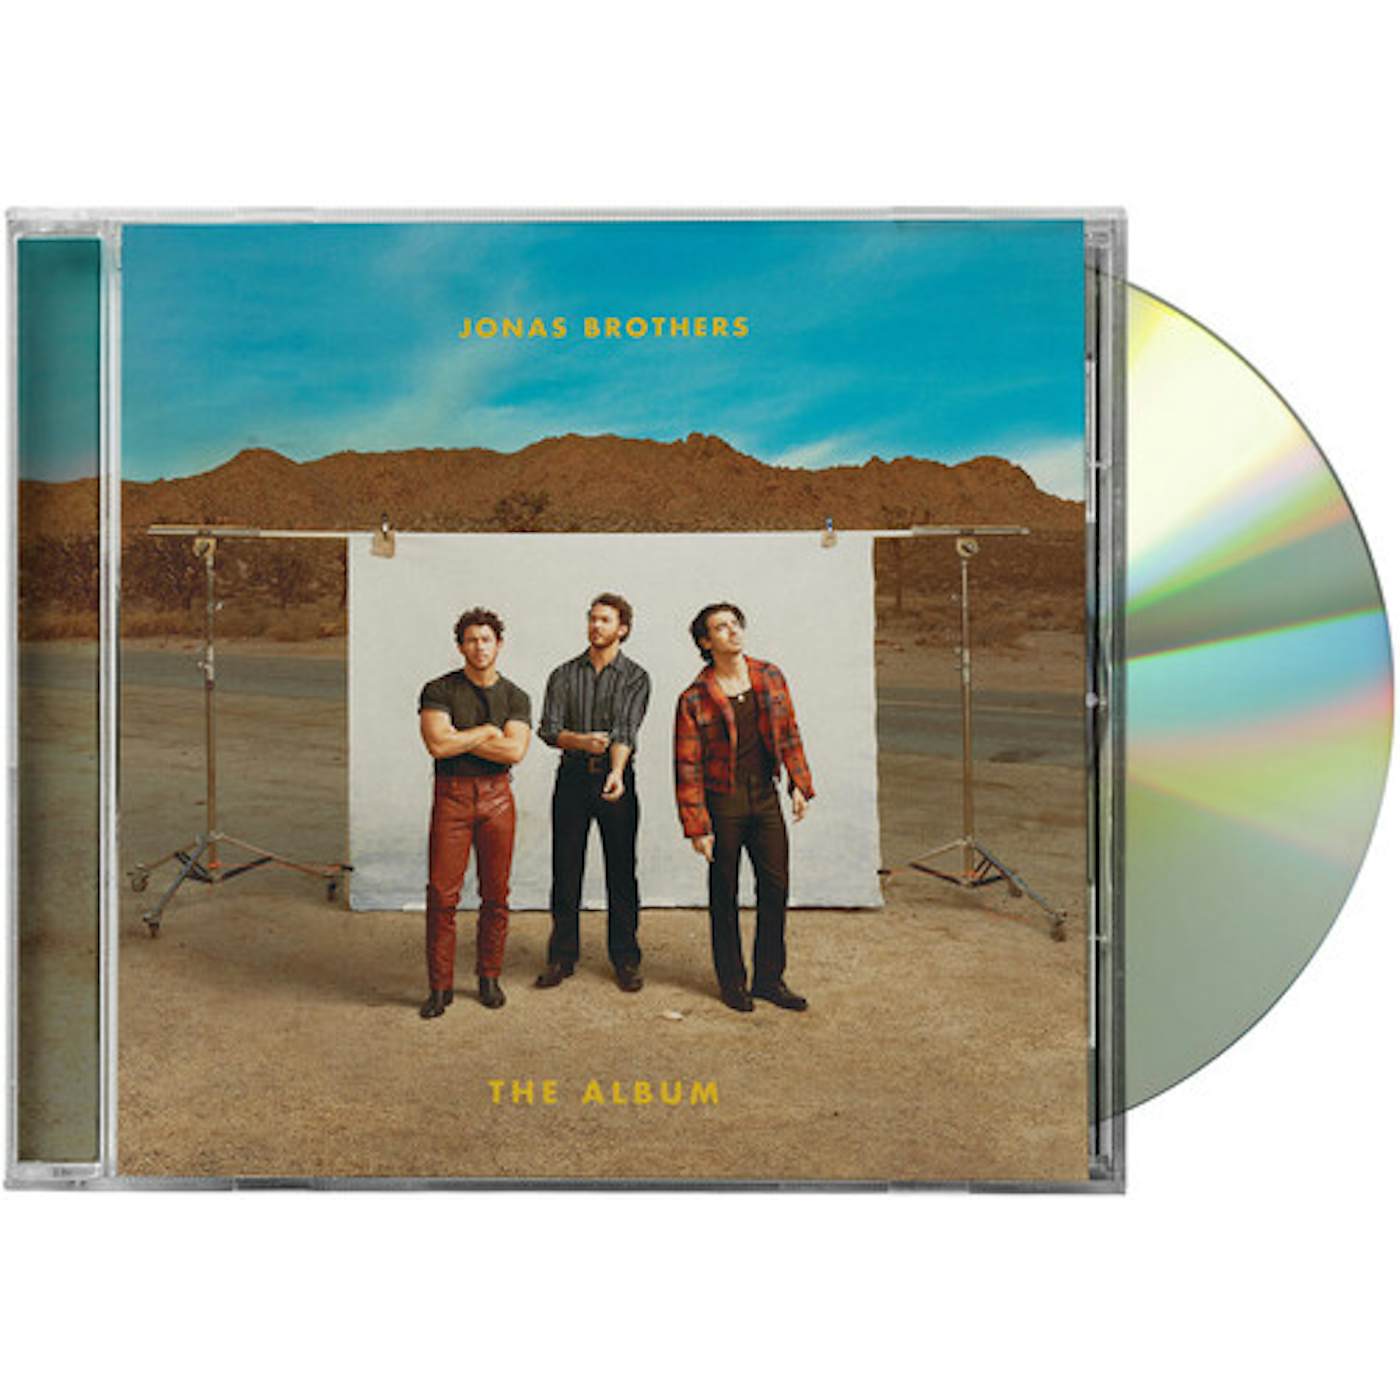 Jonas Brothers ALBUM CD